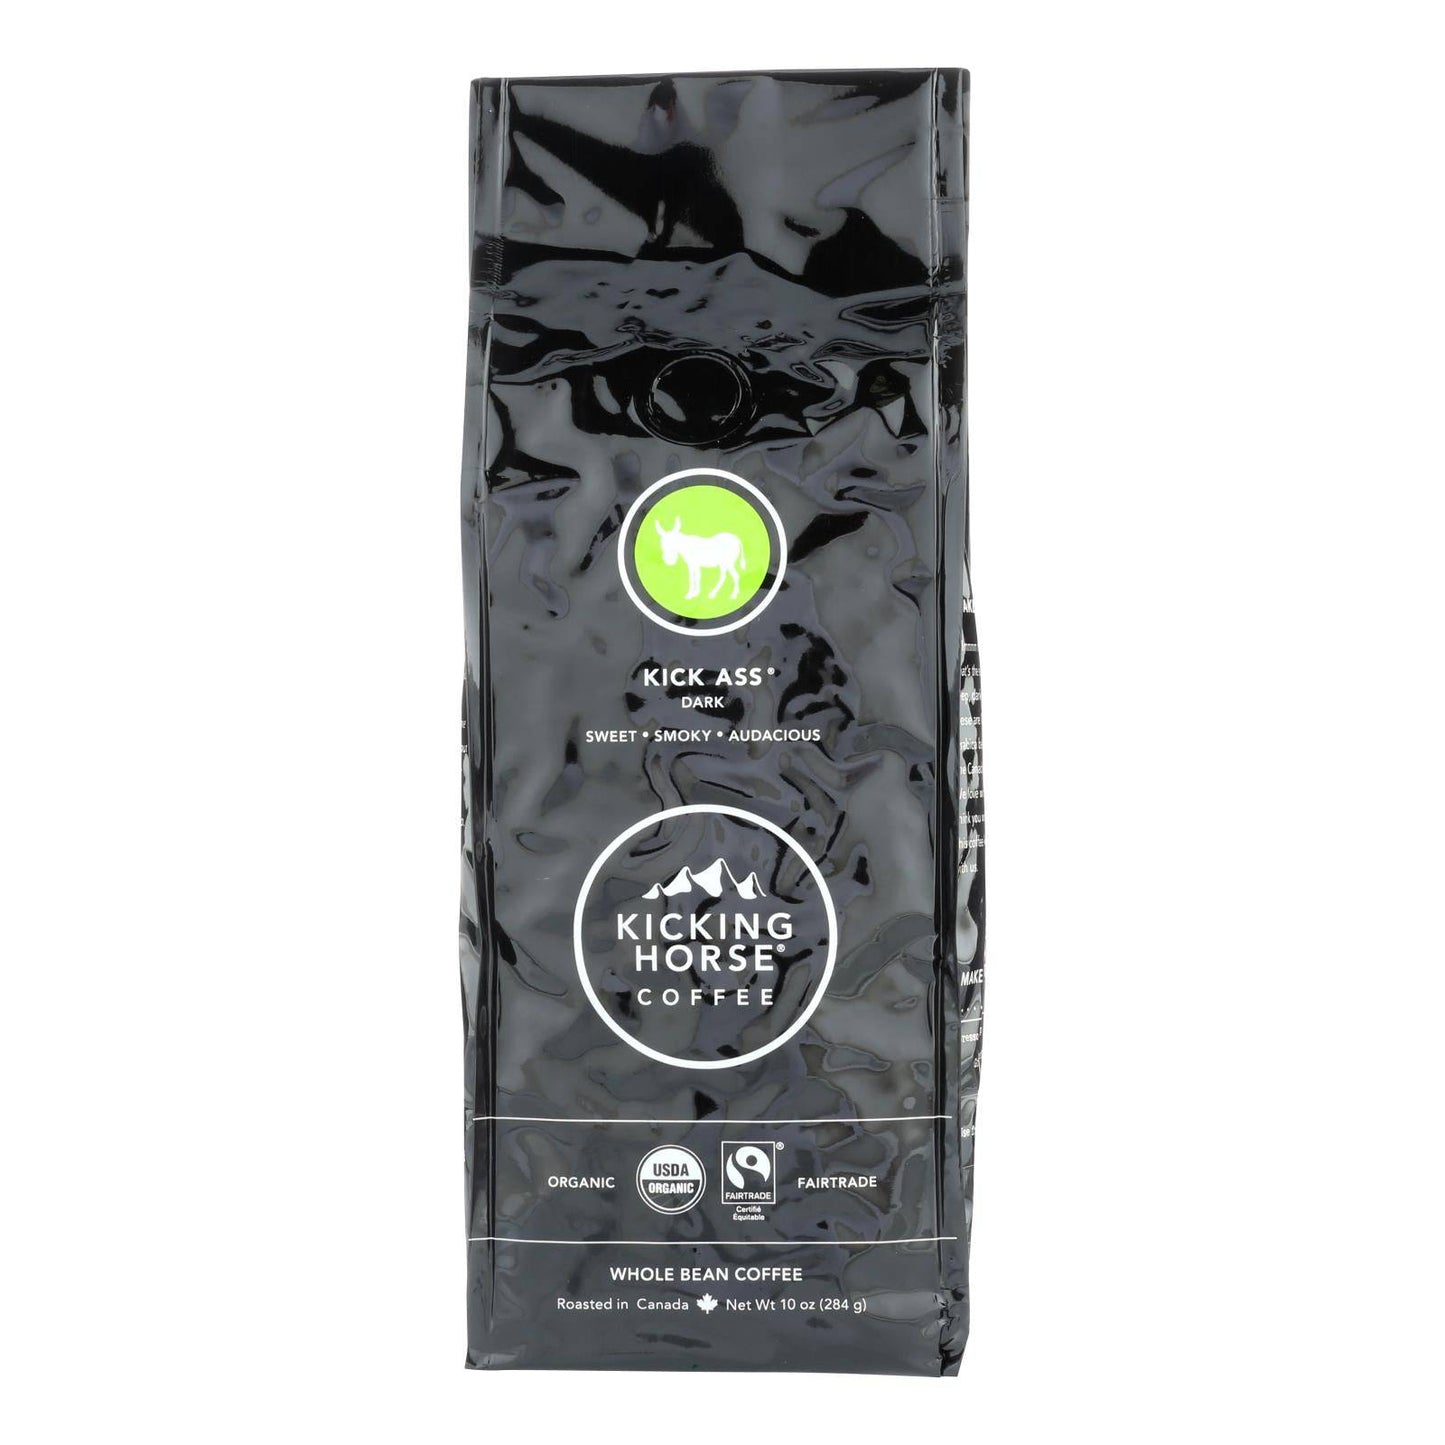 Buy Kicking Horse Coffee - Organic - Whole Bean - Kick Ass - Dark Roast - 10 Oz - Case Of 6  at OnlyNaturals.us